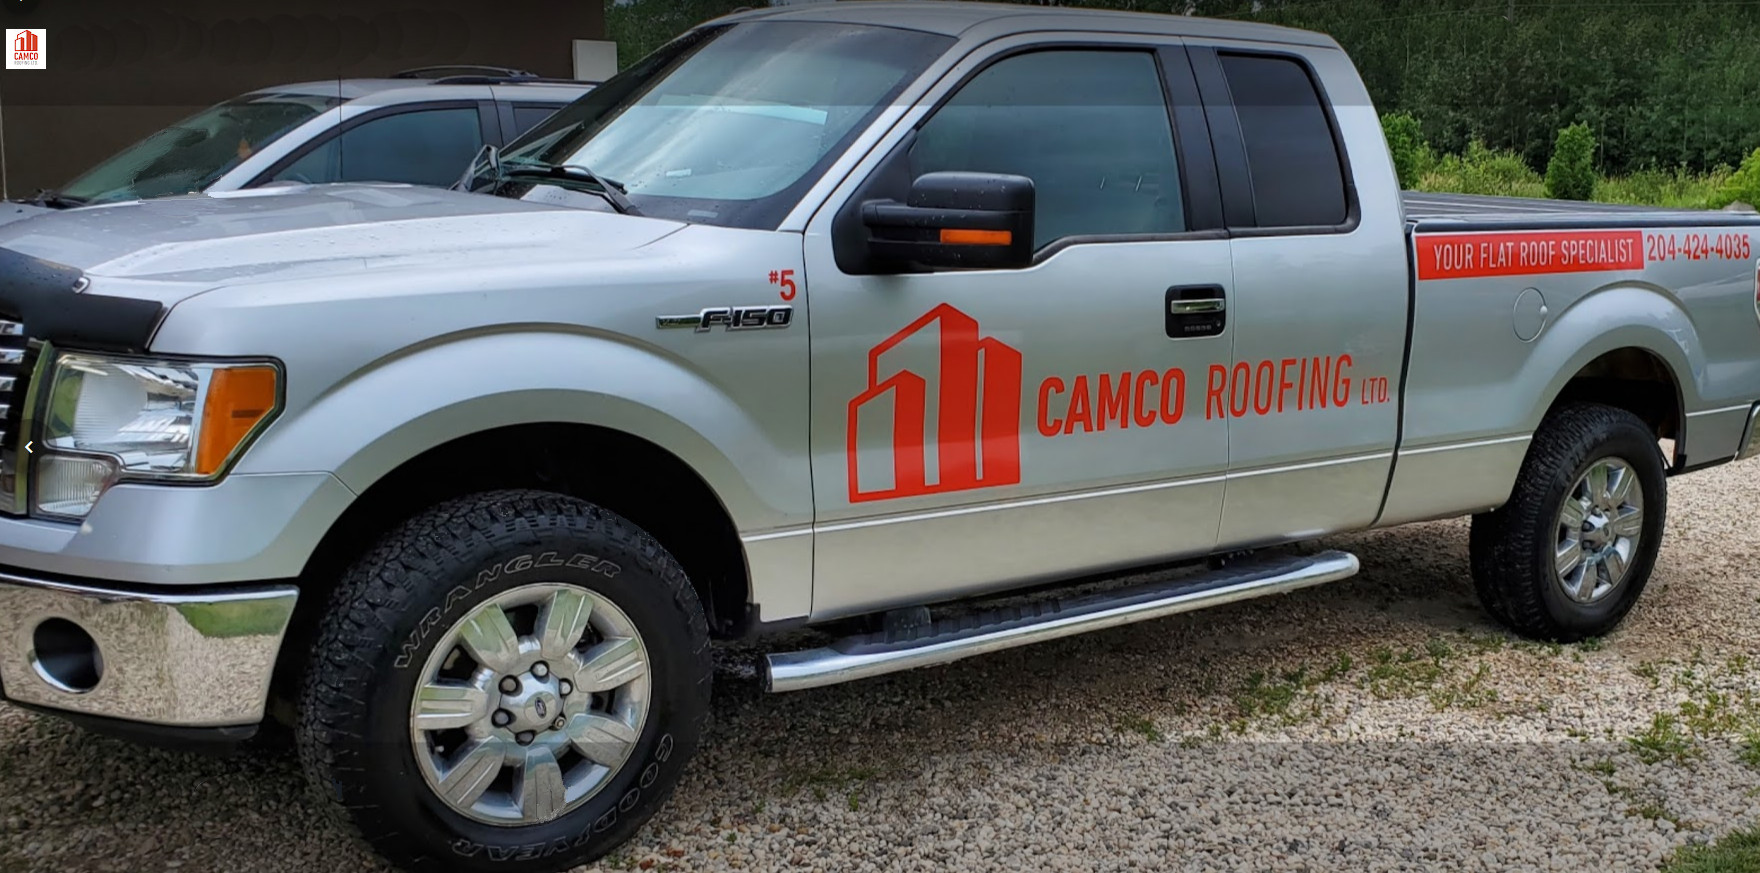 Camco Roofing Ltd - Fleet Truck